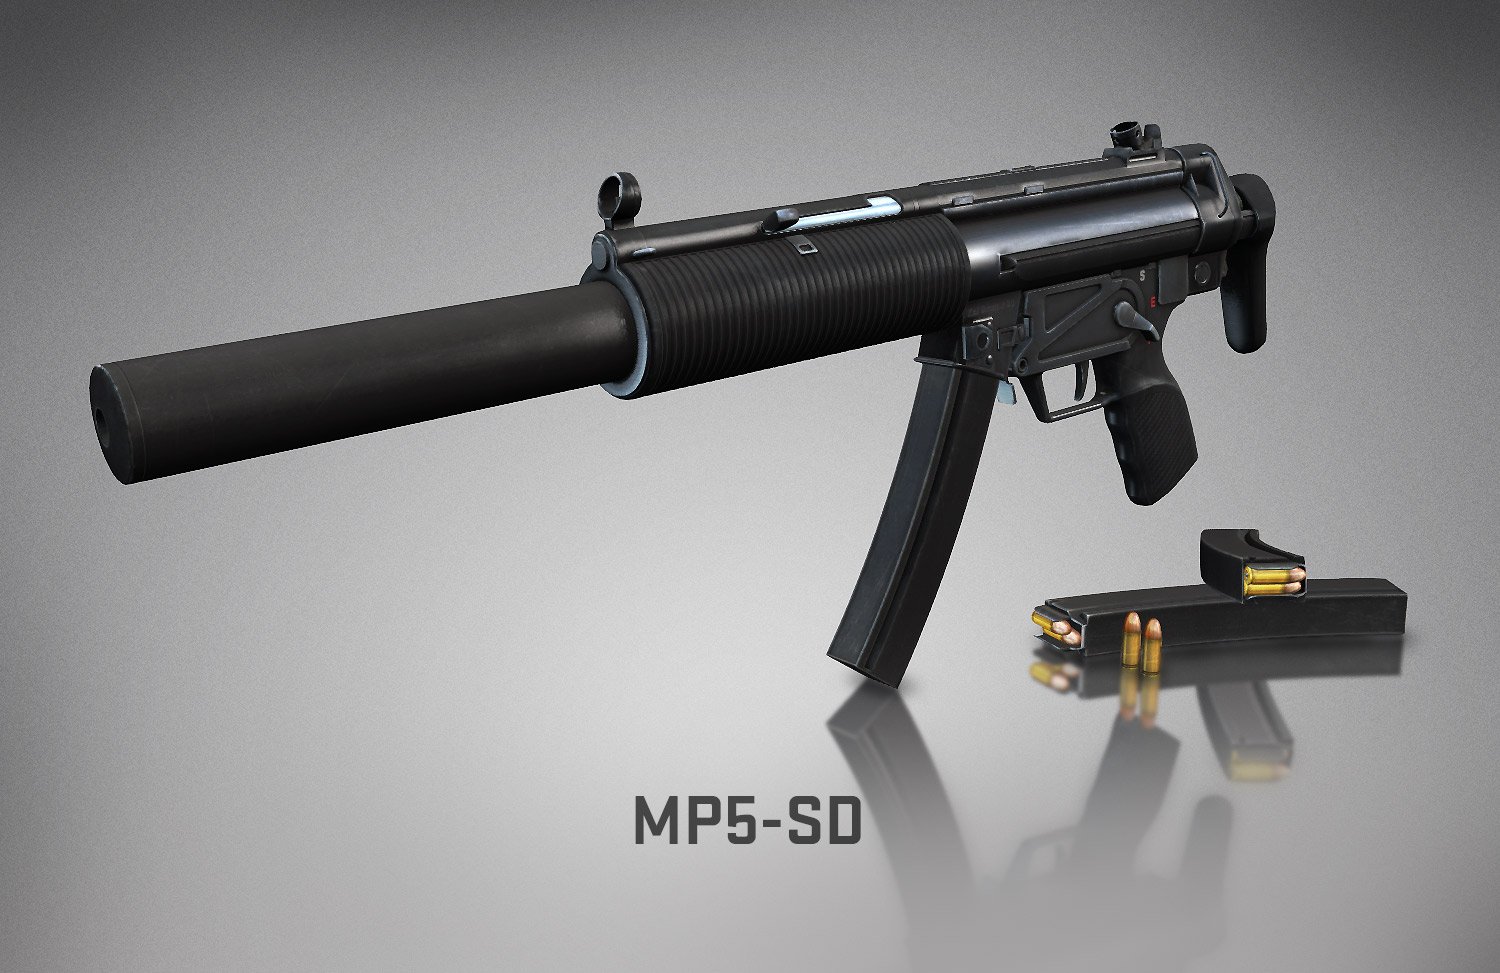 Details about   Vintage 1980s CHALLENGER2 MP5 Military SubMachine Gun Flash Sound Recoil Box NEW